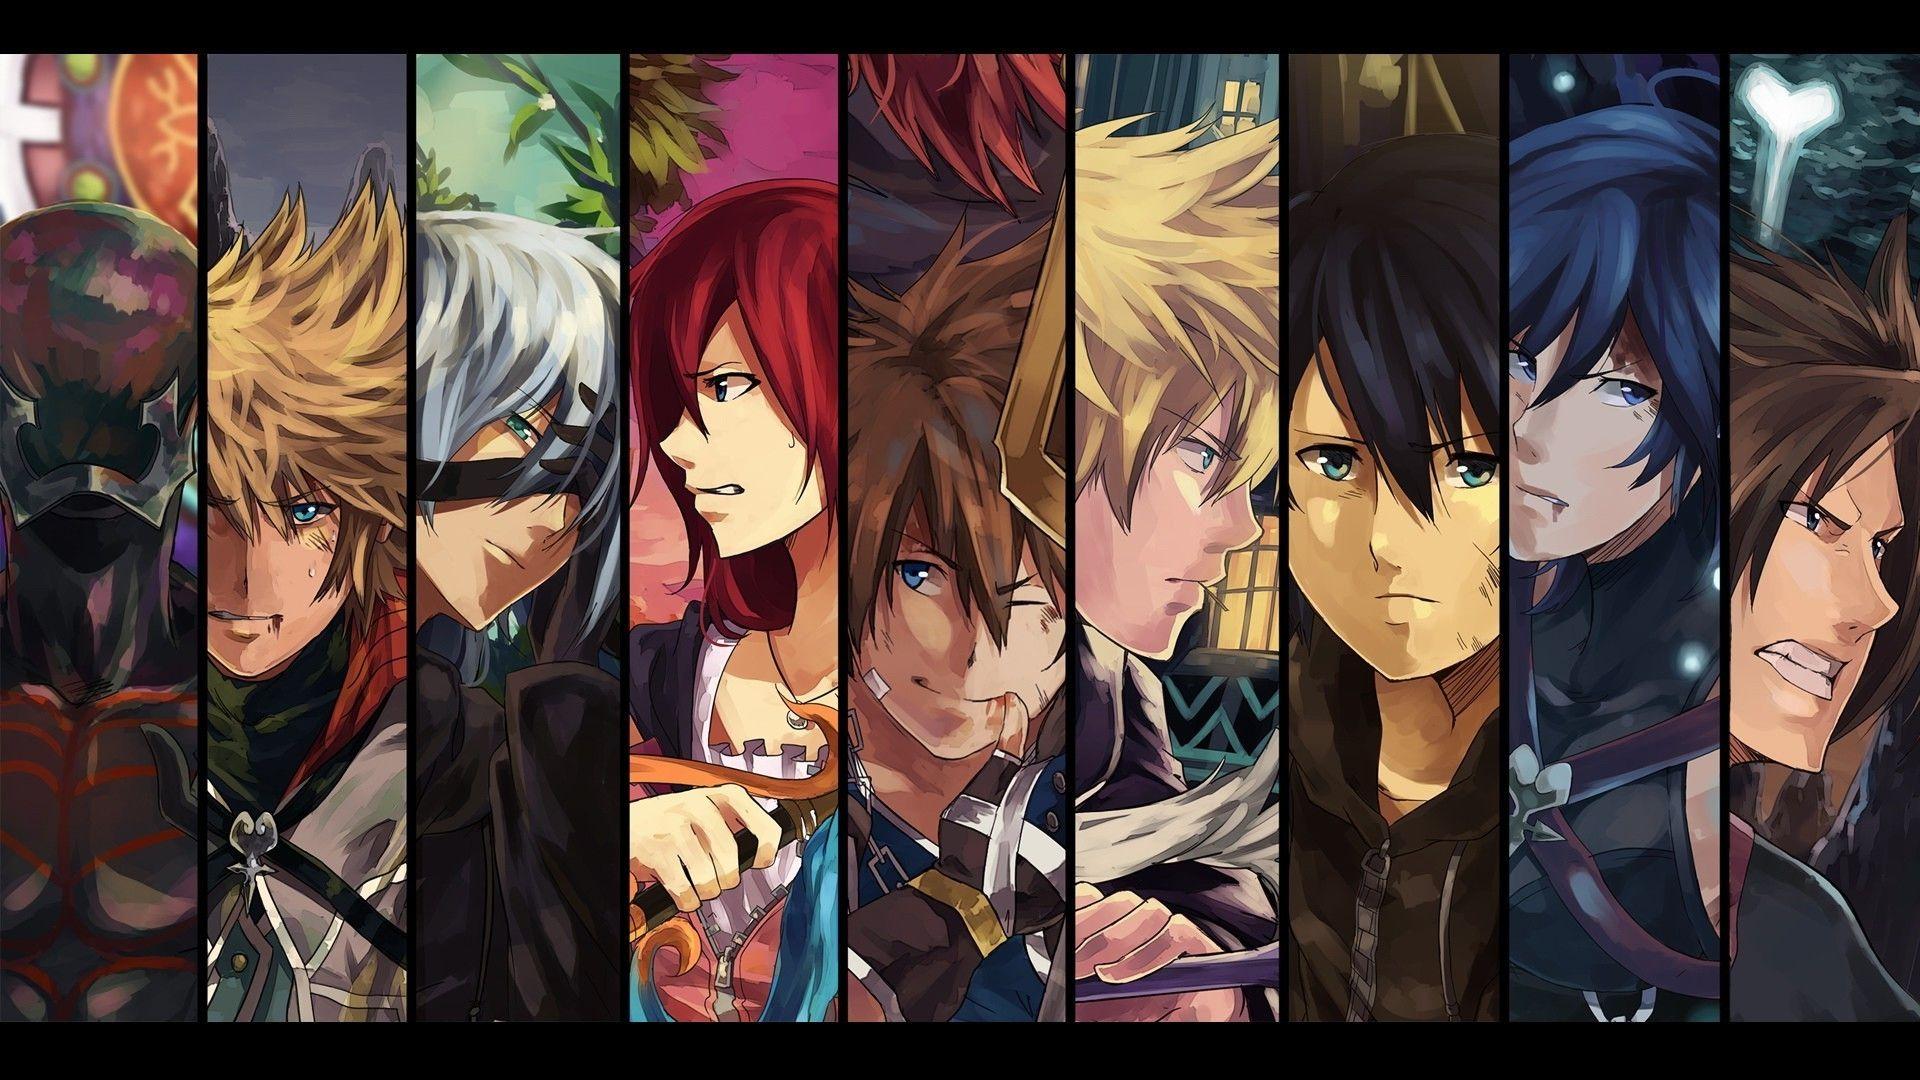 Kingdom Hearts 3 Wallpaper